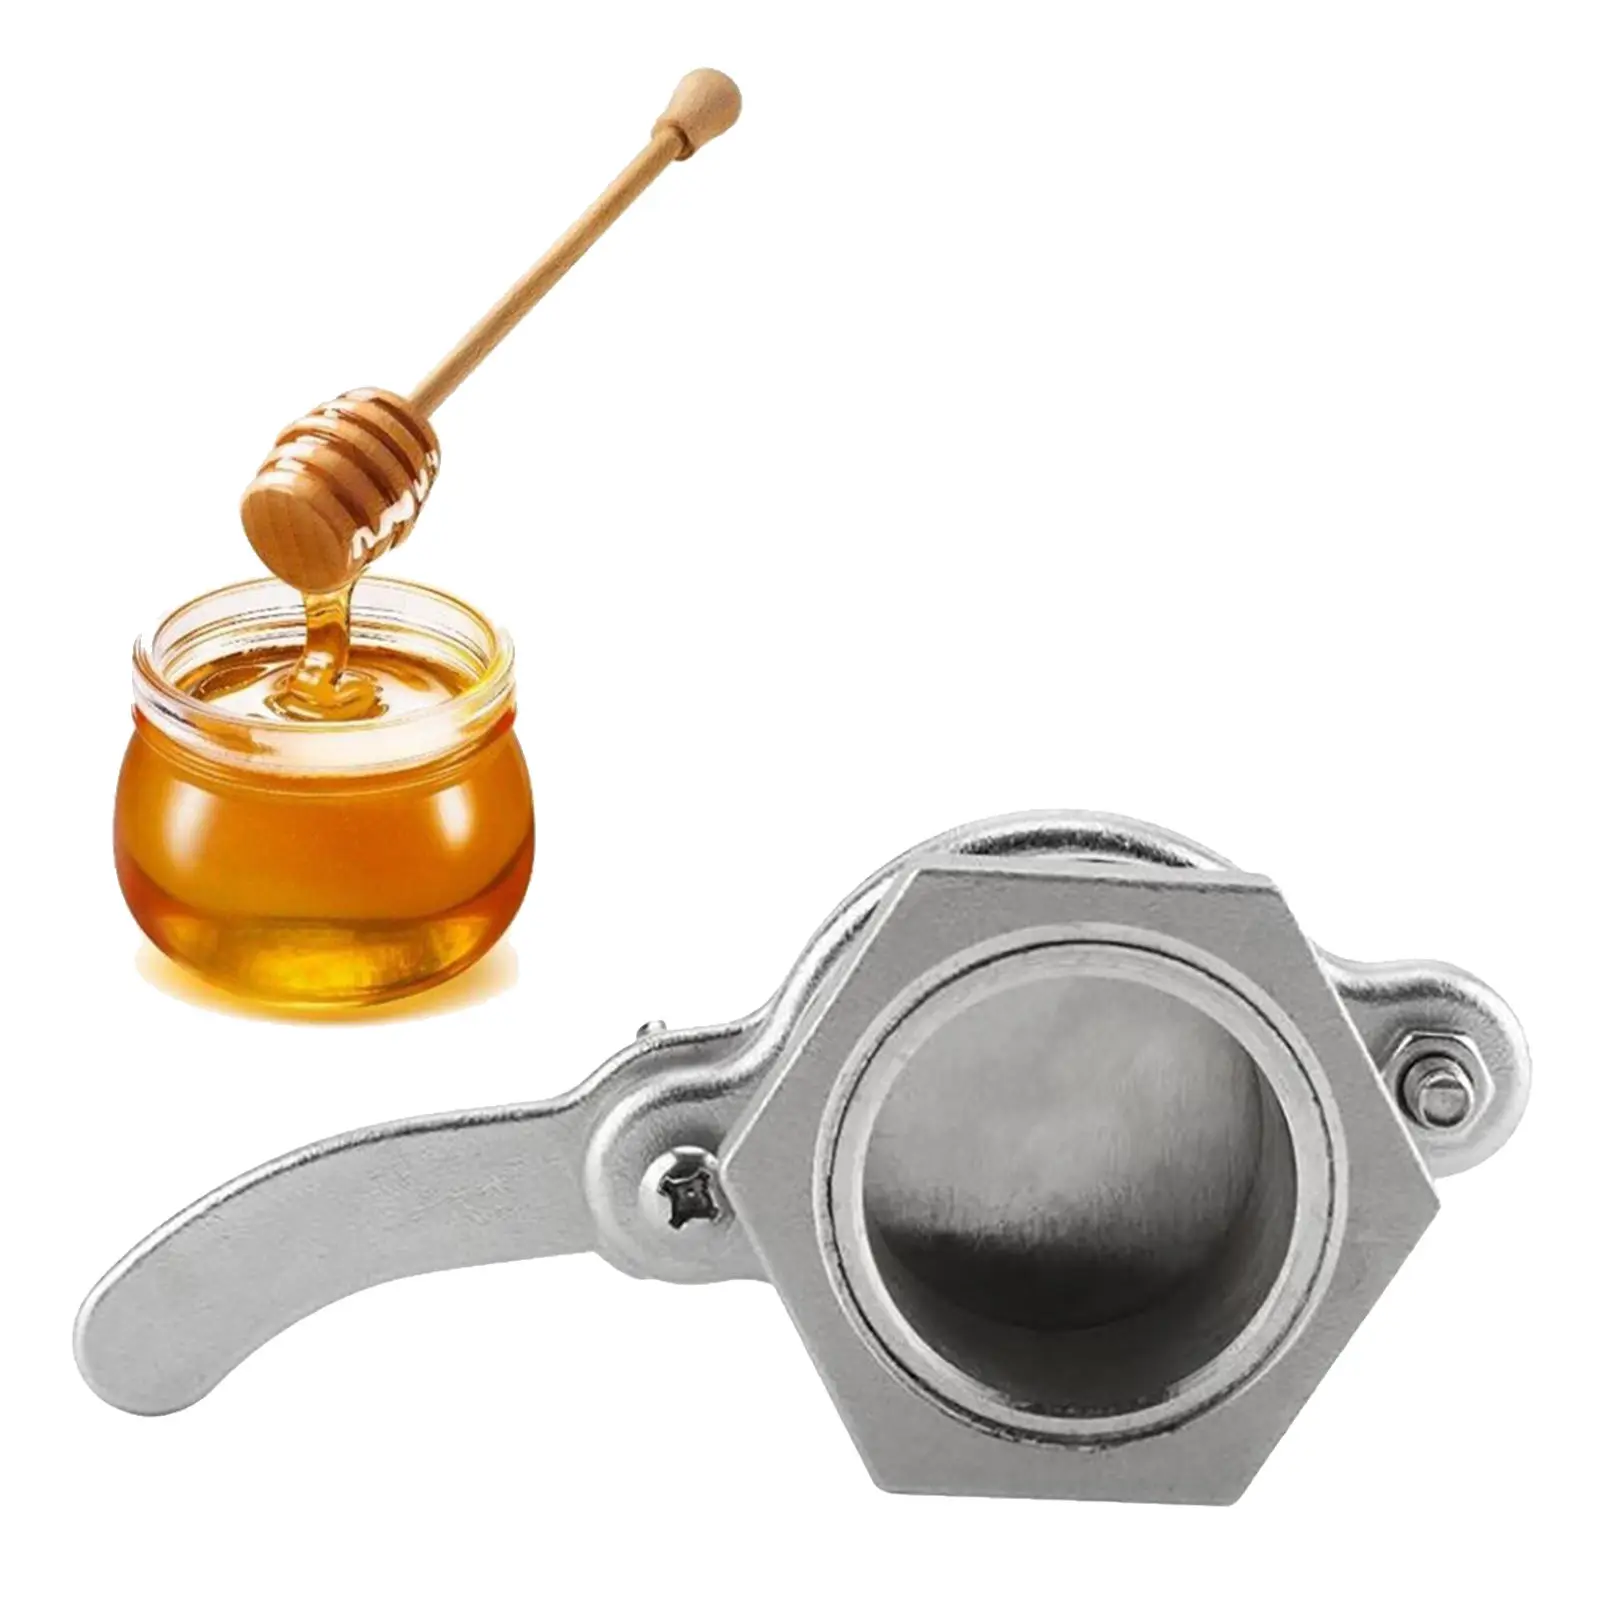 Honey Gate Valve Honey Extractor,Honey Tap Tool,Food Grade Stainless Steel Honey Shake Machine,Honey Gate Valve,Beekeeping Tool